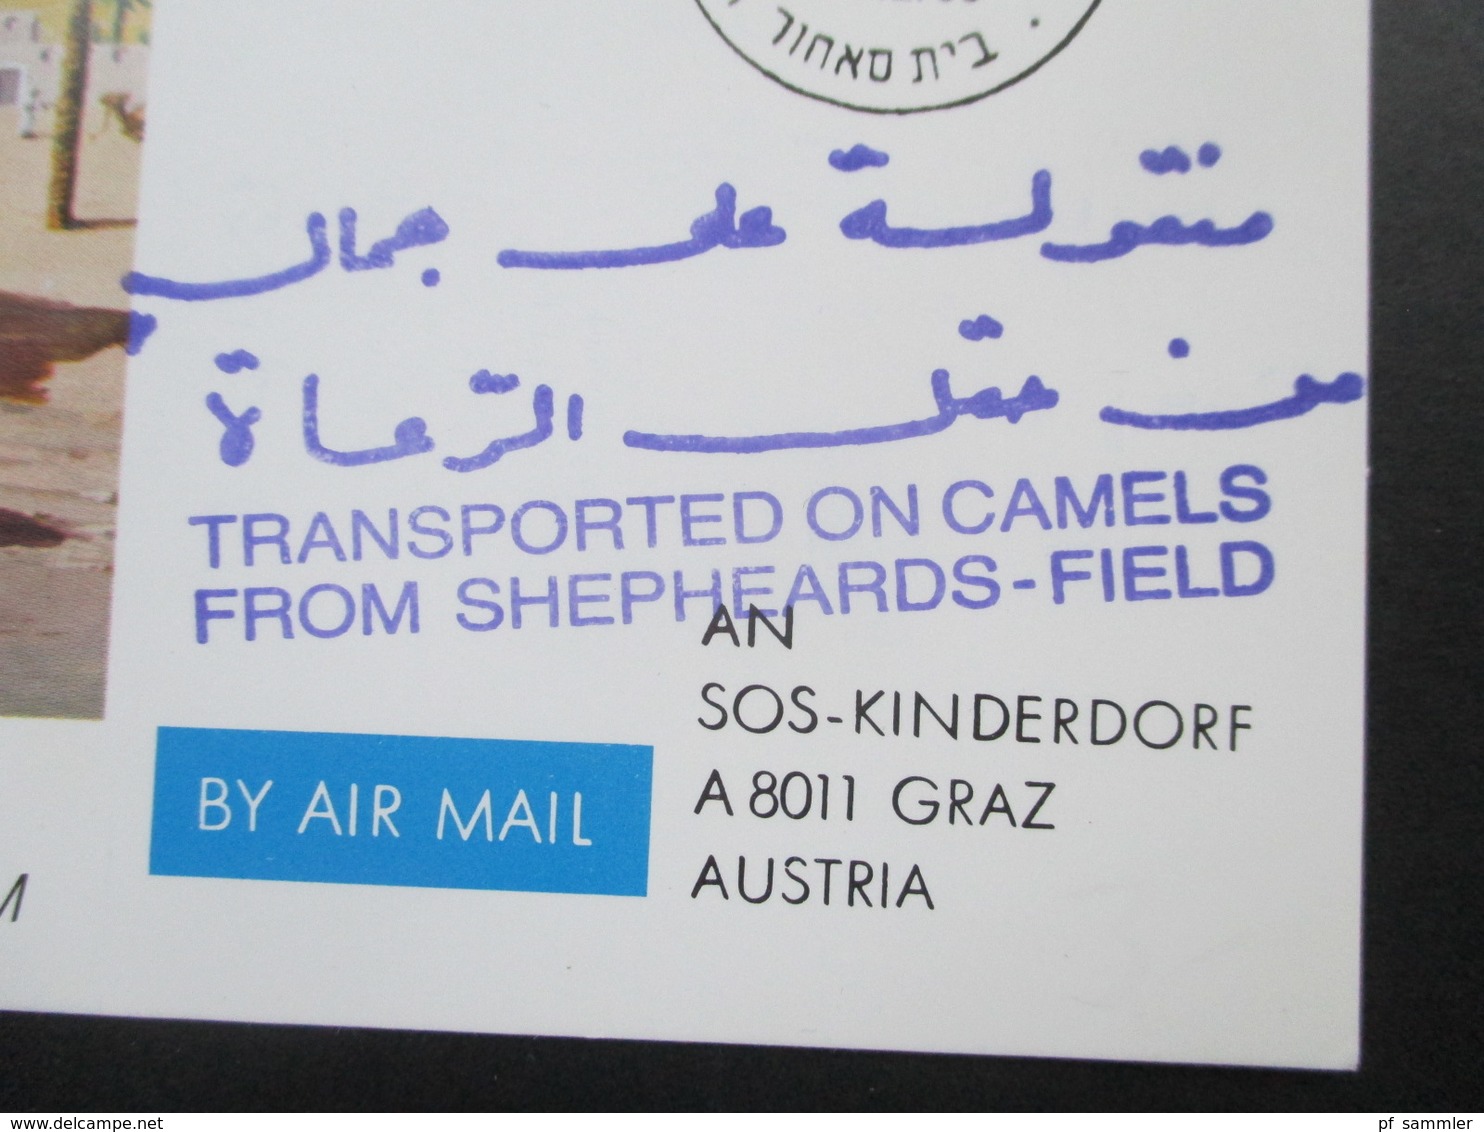 Israel 1983 AK Befördert Mit Kamelen Vom Hirtenfeld Nach Bethlehem. Transported On Camels From Shepheards Field. SoS Kin - Altri (Terra)